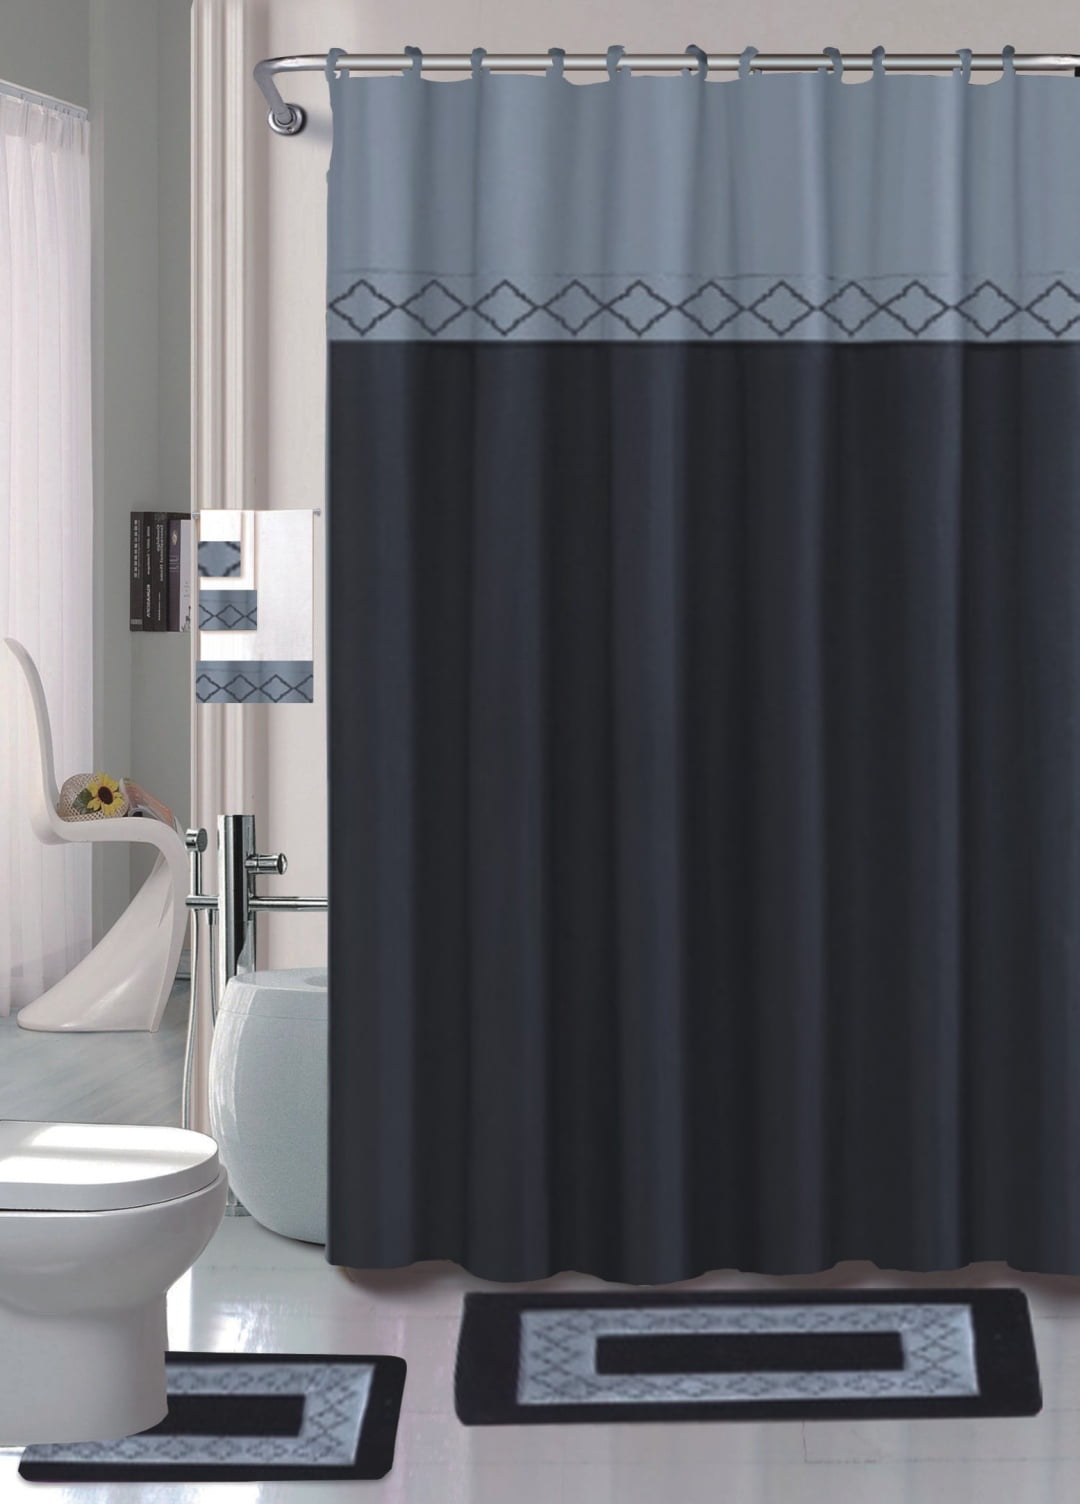 Blue Gray Grey Geometric 15 pc Shower Curtain Set Fabric Hooks 72 Inch Bath Rugs